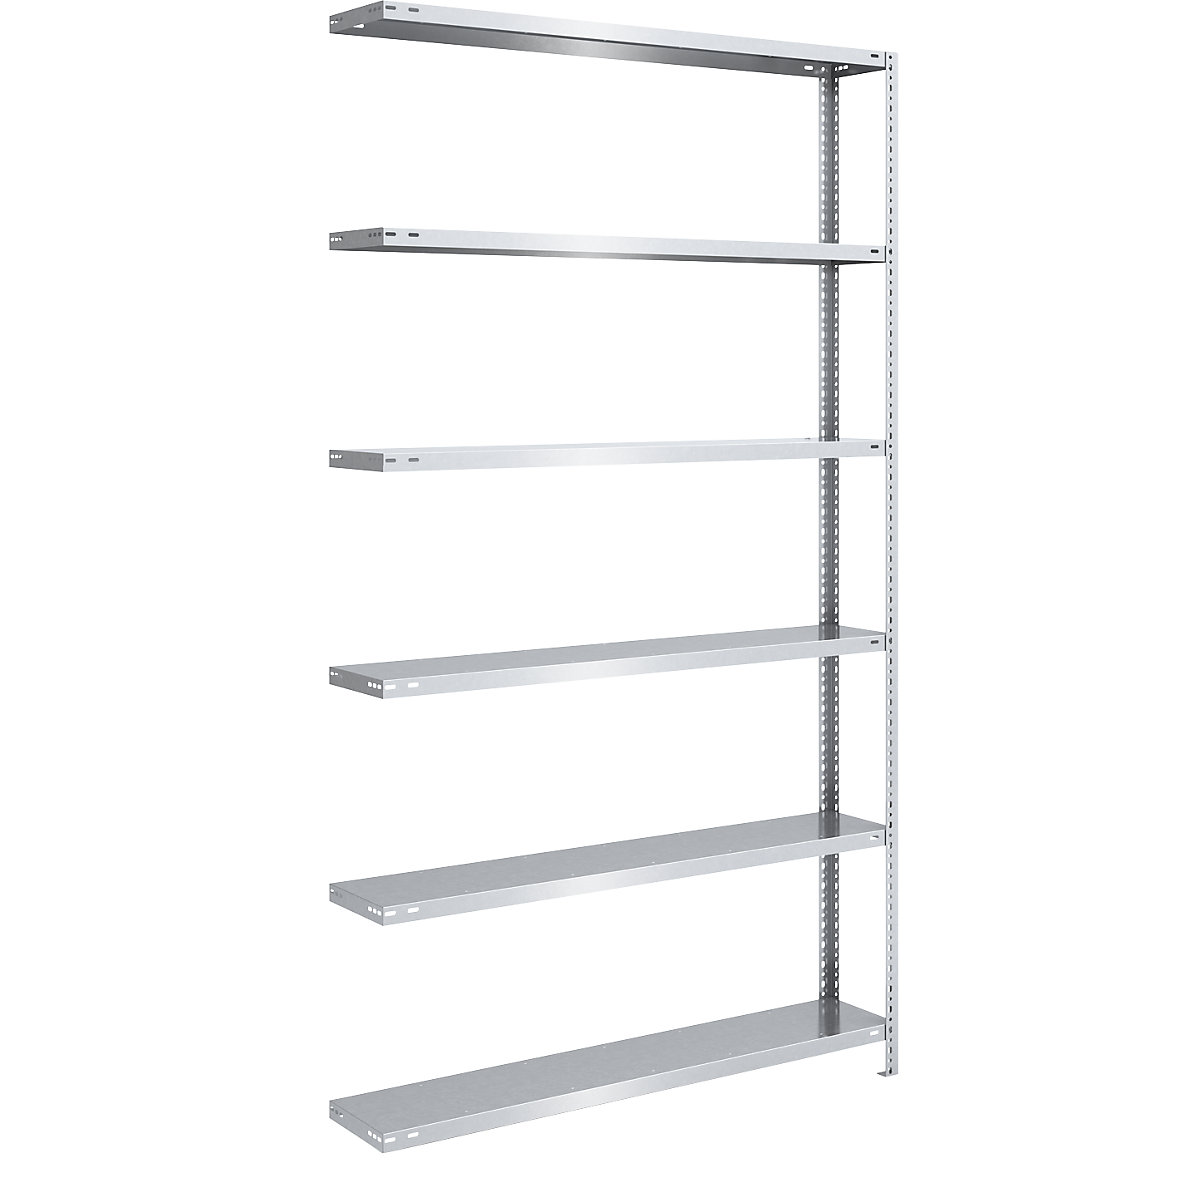 Bolt-together shelf unit, light duty, zinc plated – eurokraft pro